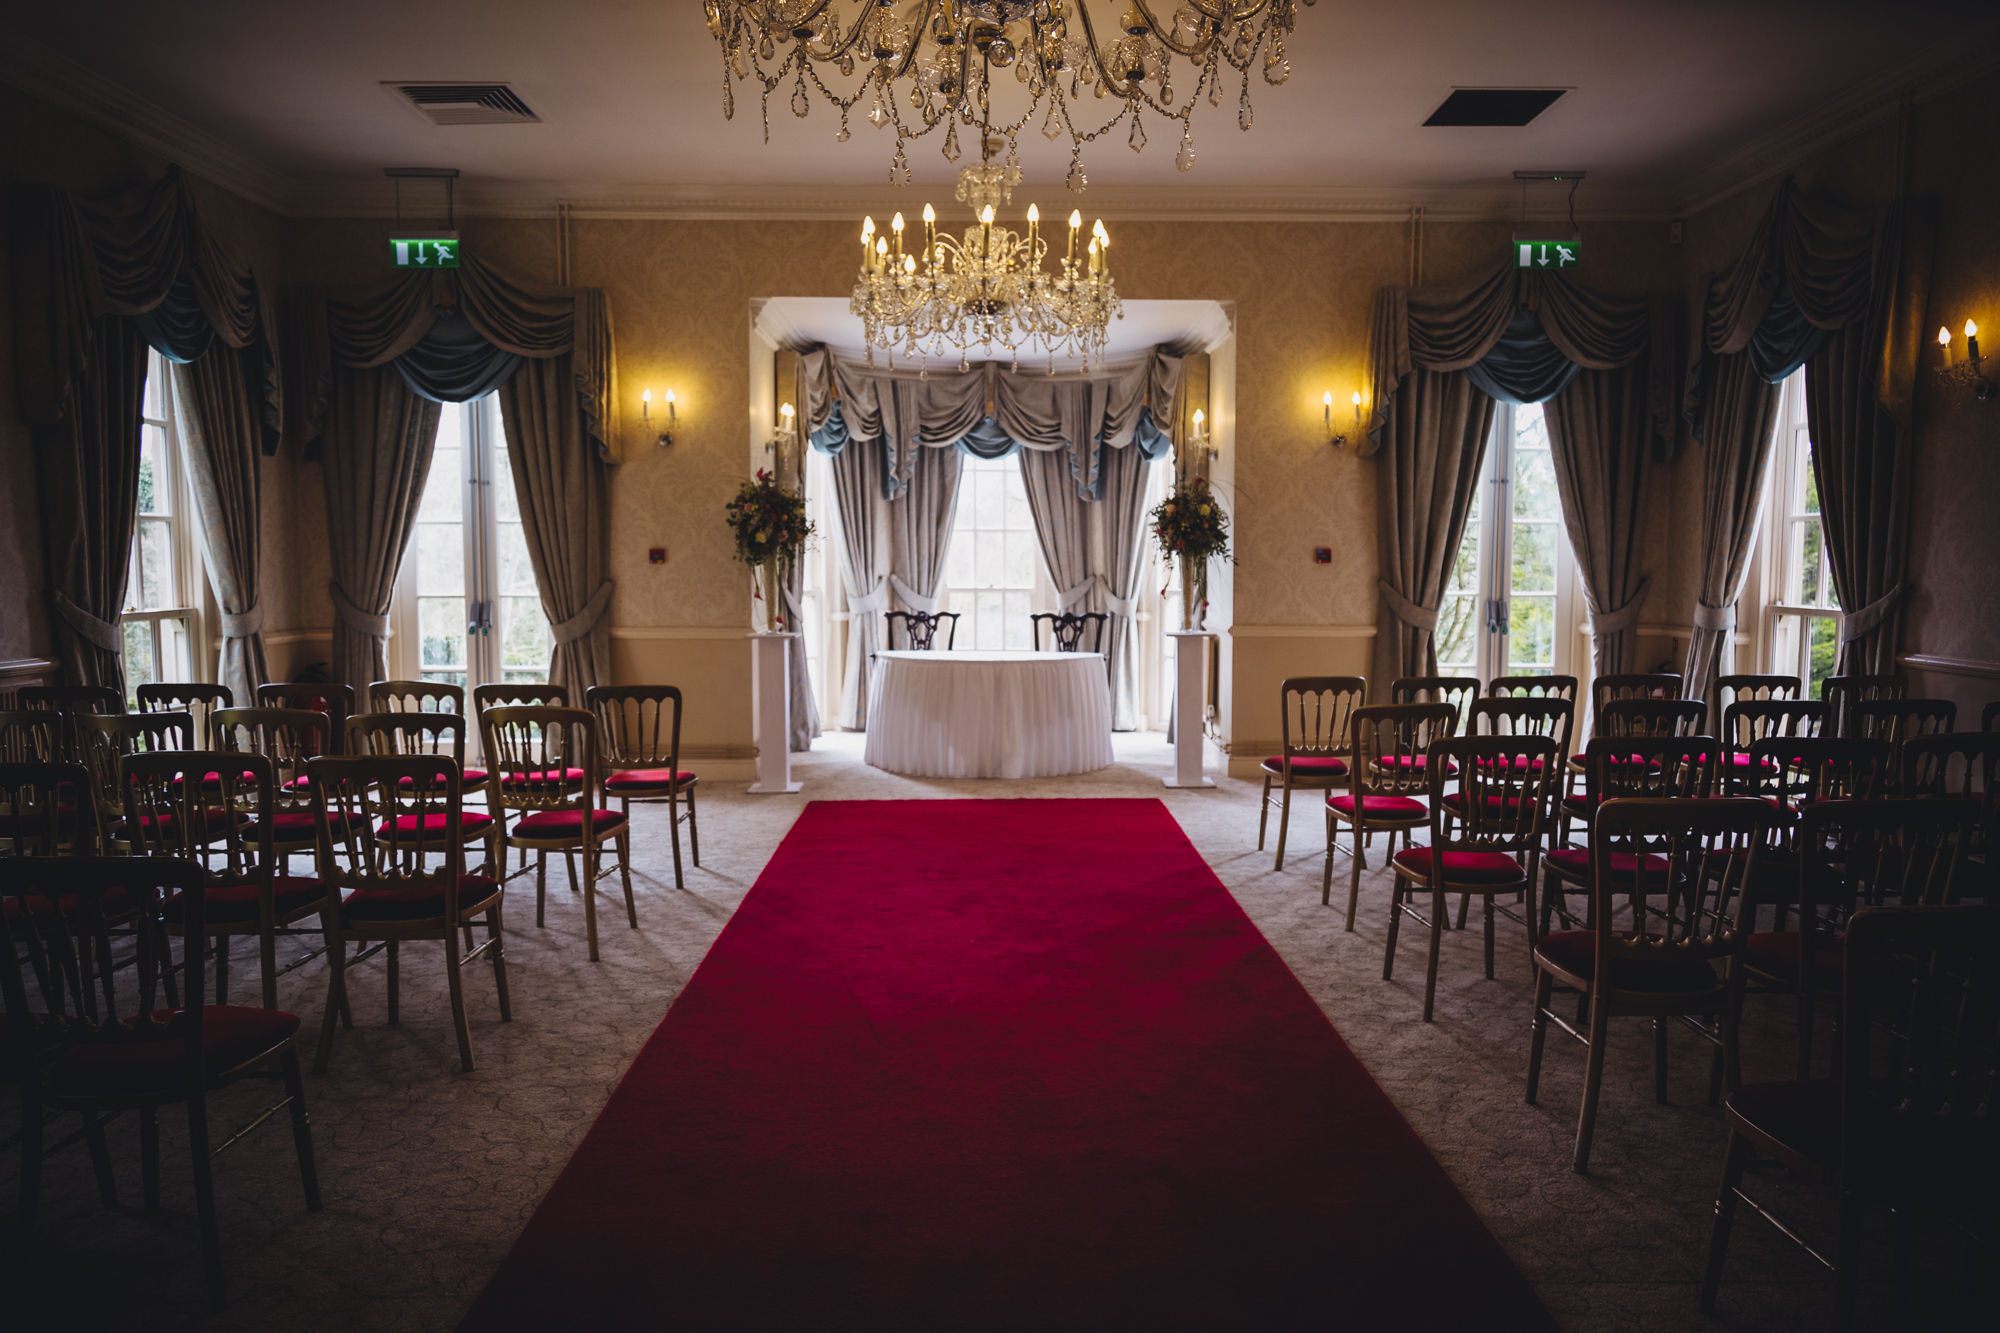 Decourceys wedding venue and photographer